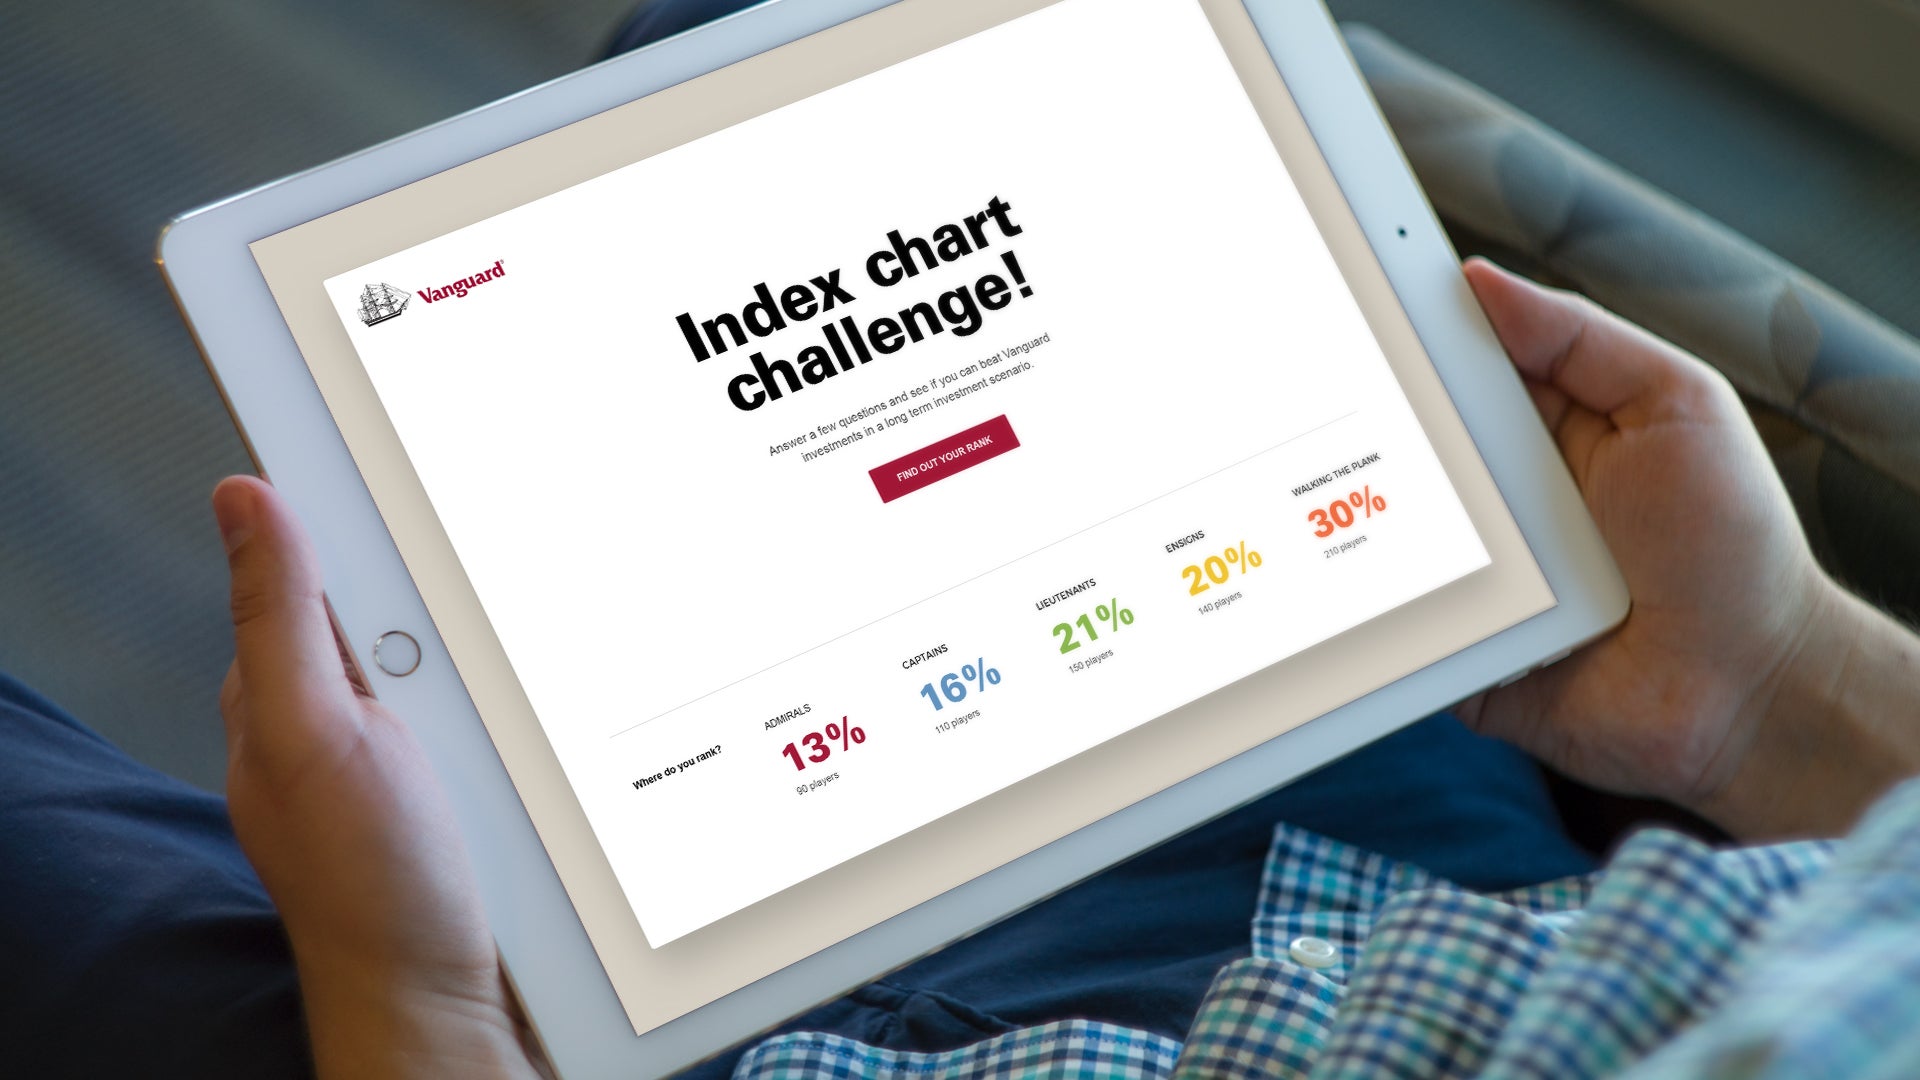 Vanguard-index-chart-challenge website on a tablet device